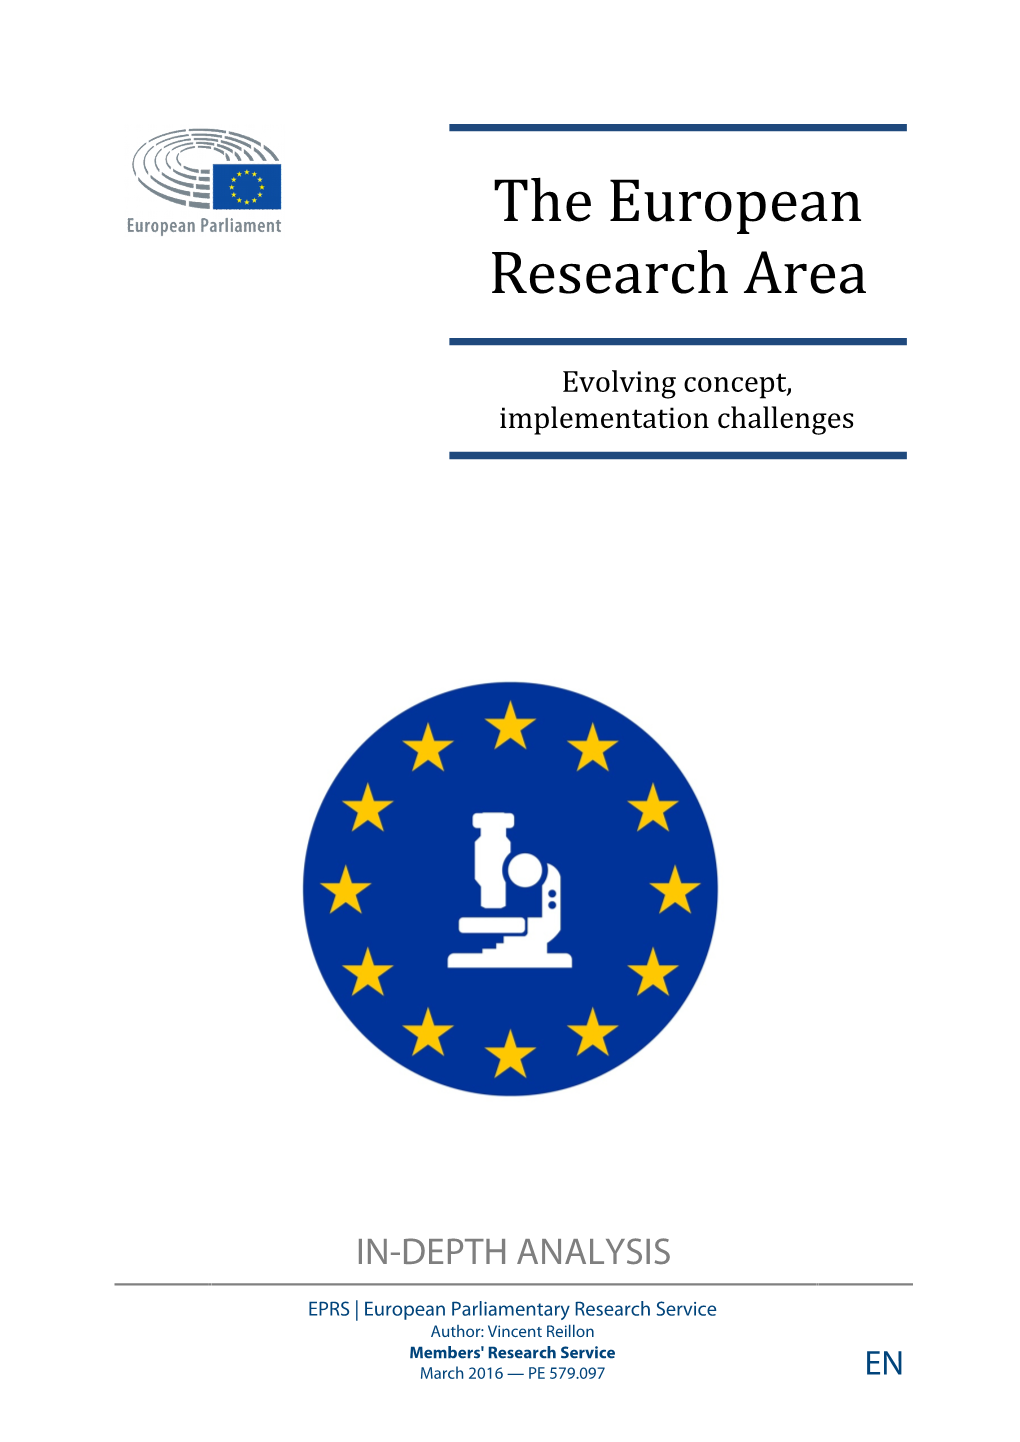 European Research Area Evolving Concept, Implementation Challenges